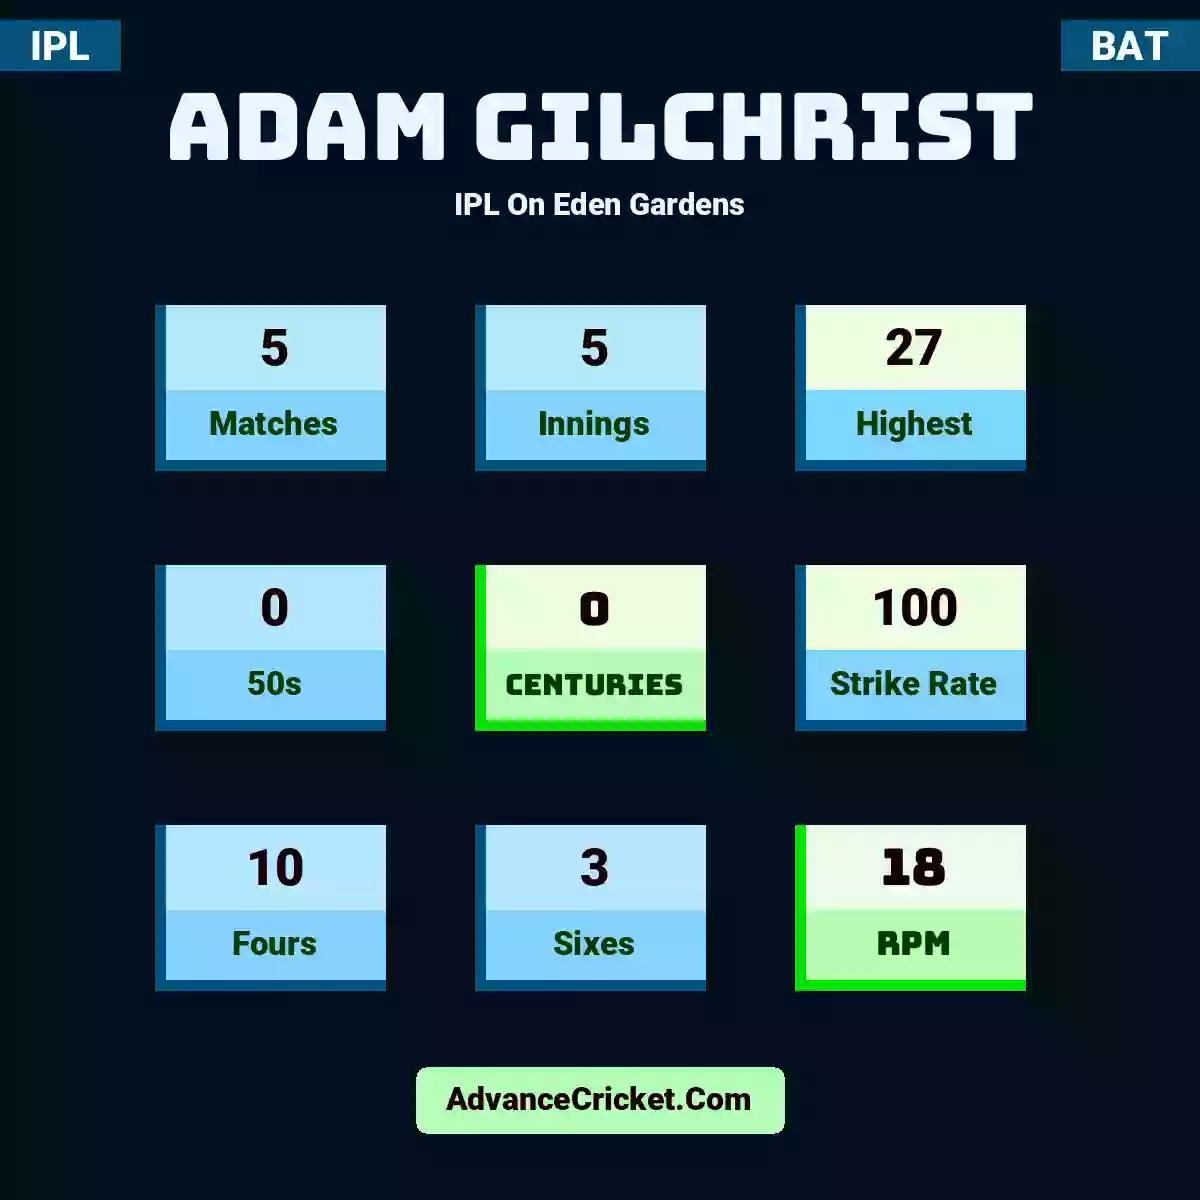 Adam Gilchrist IPL  On Eden Gardens, Adam Gilchrist played 5 matches, scored 27 runs as highest, 0 half-centuries, and 0 centuries, with a strike rate of 100. A.Gilchrist hit 10 fours and 3 sixes, with an RPM of 18.